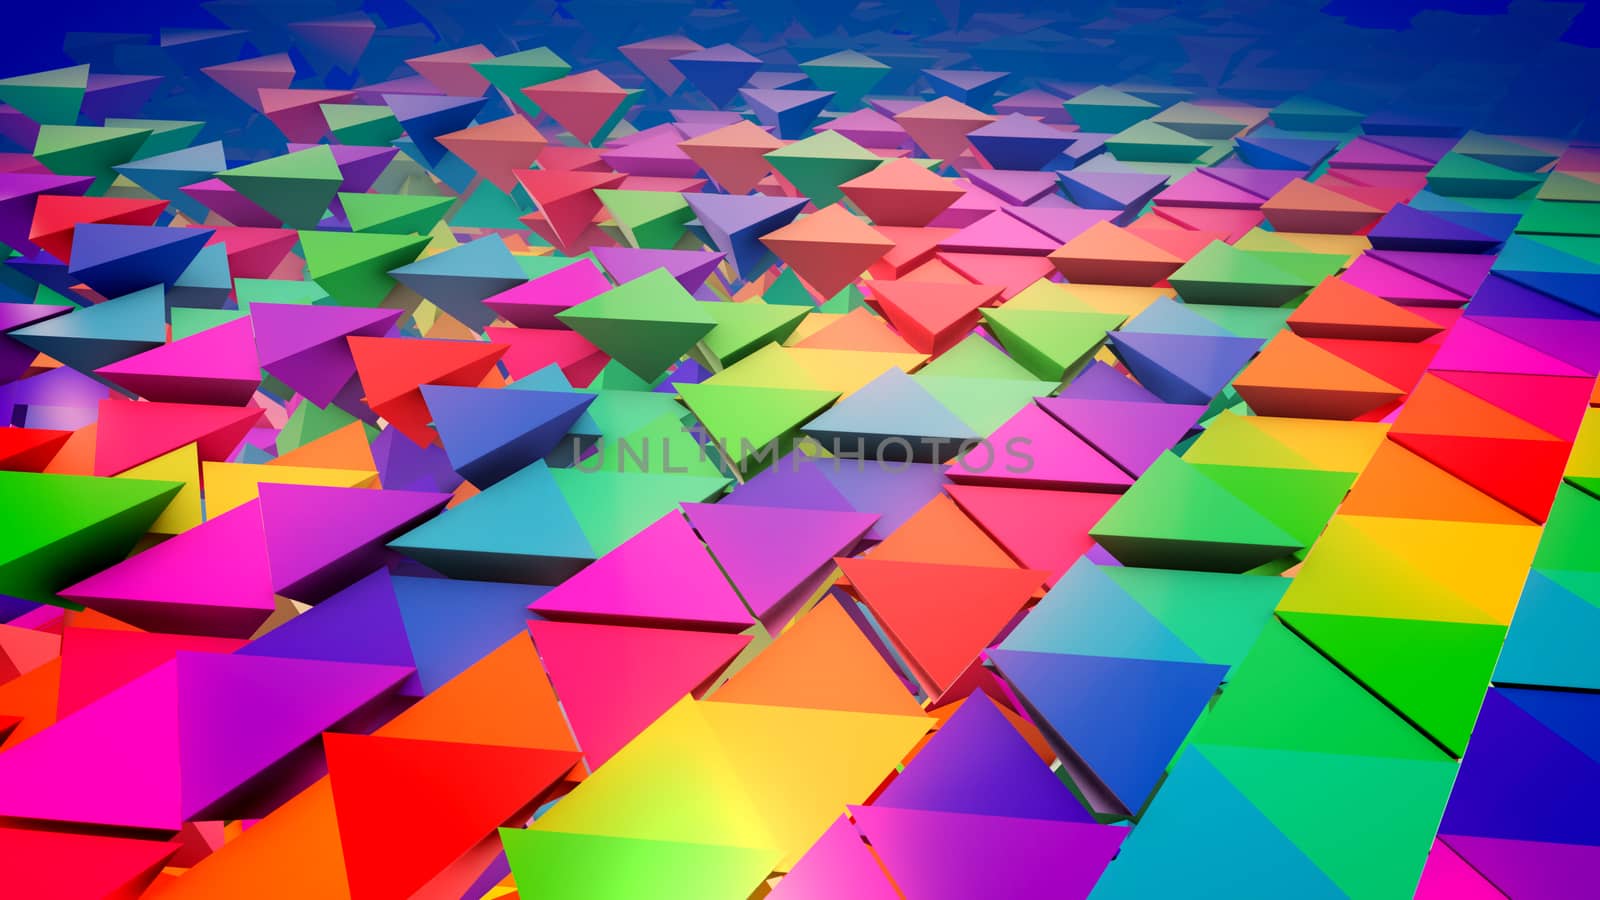 Stripes of colored triangular pyramids by klss